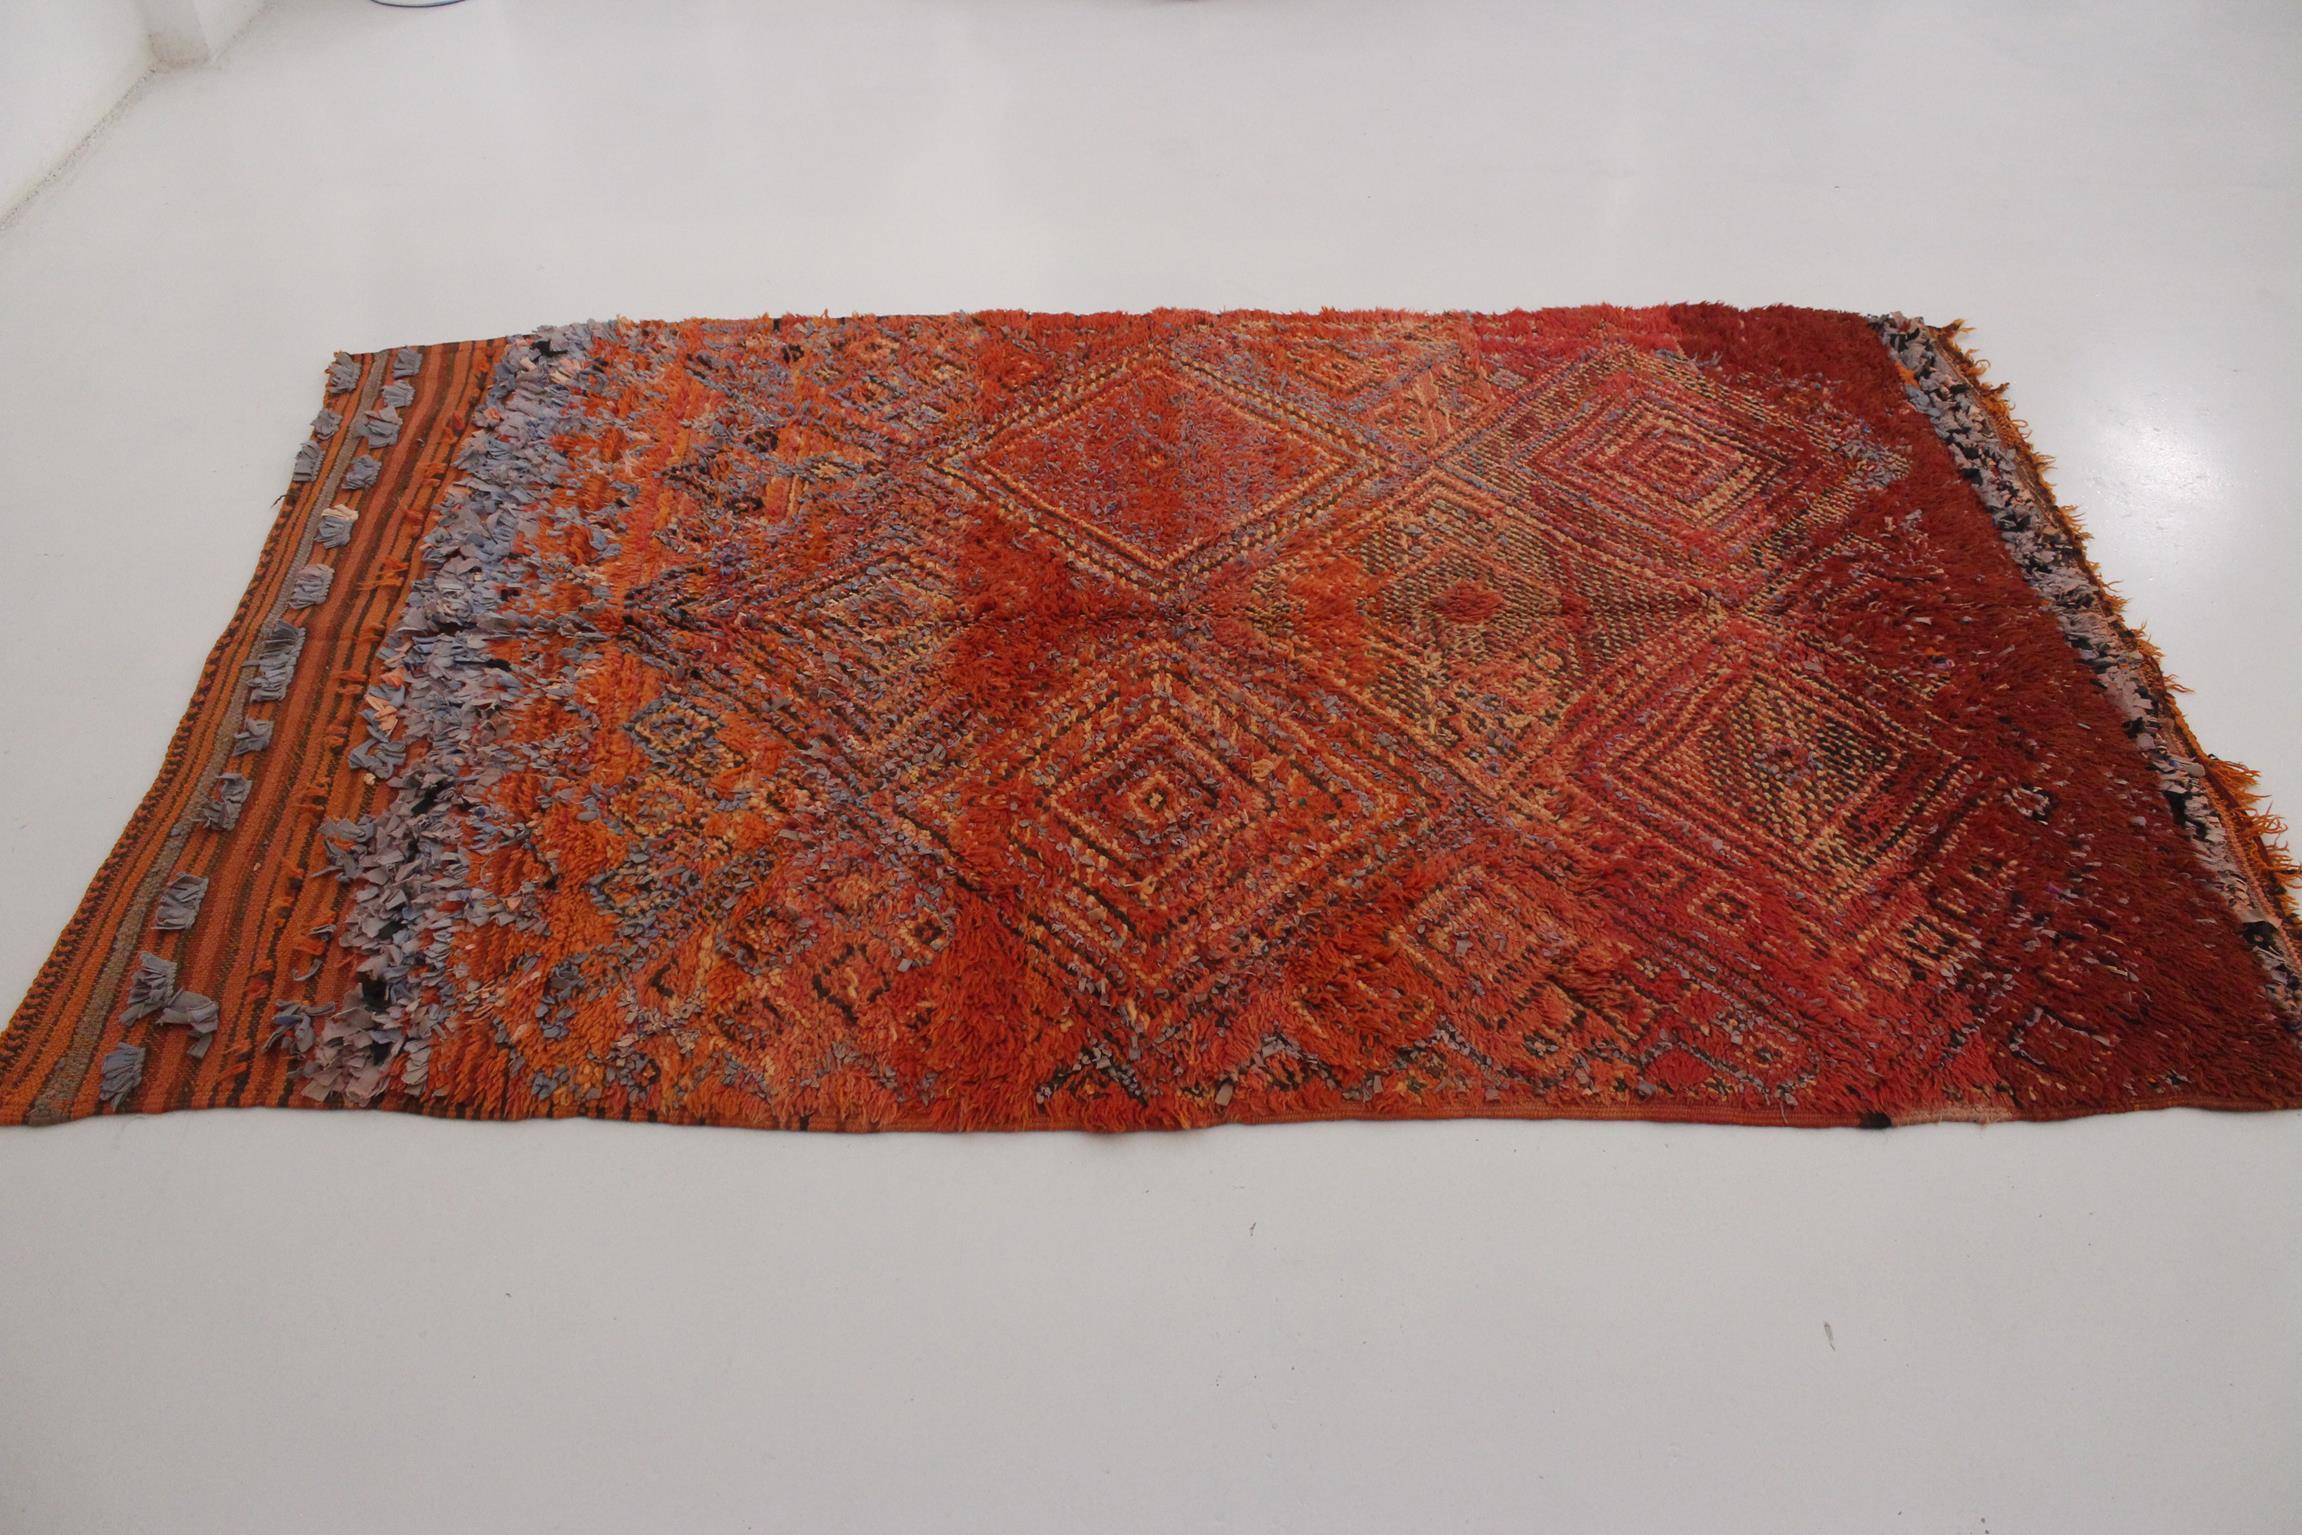 Tribal Vintage Moroccan Beni Mguild rug - Orange/red/lavender - 5x7.8feet / 153x240cm